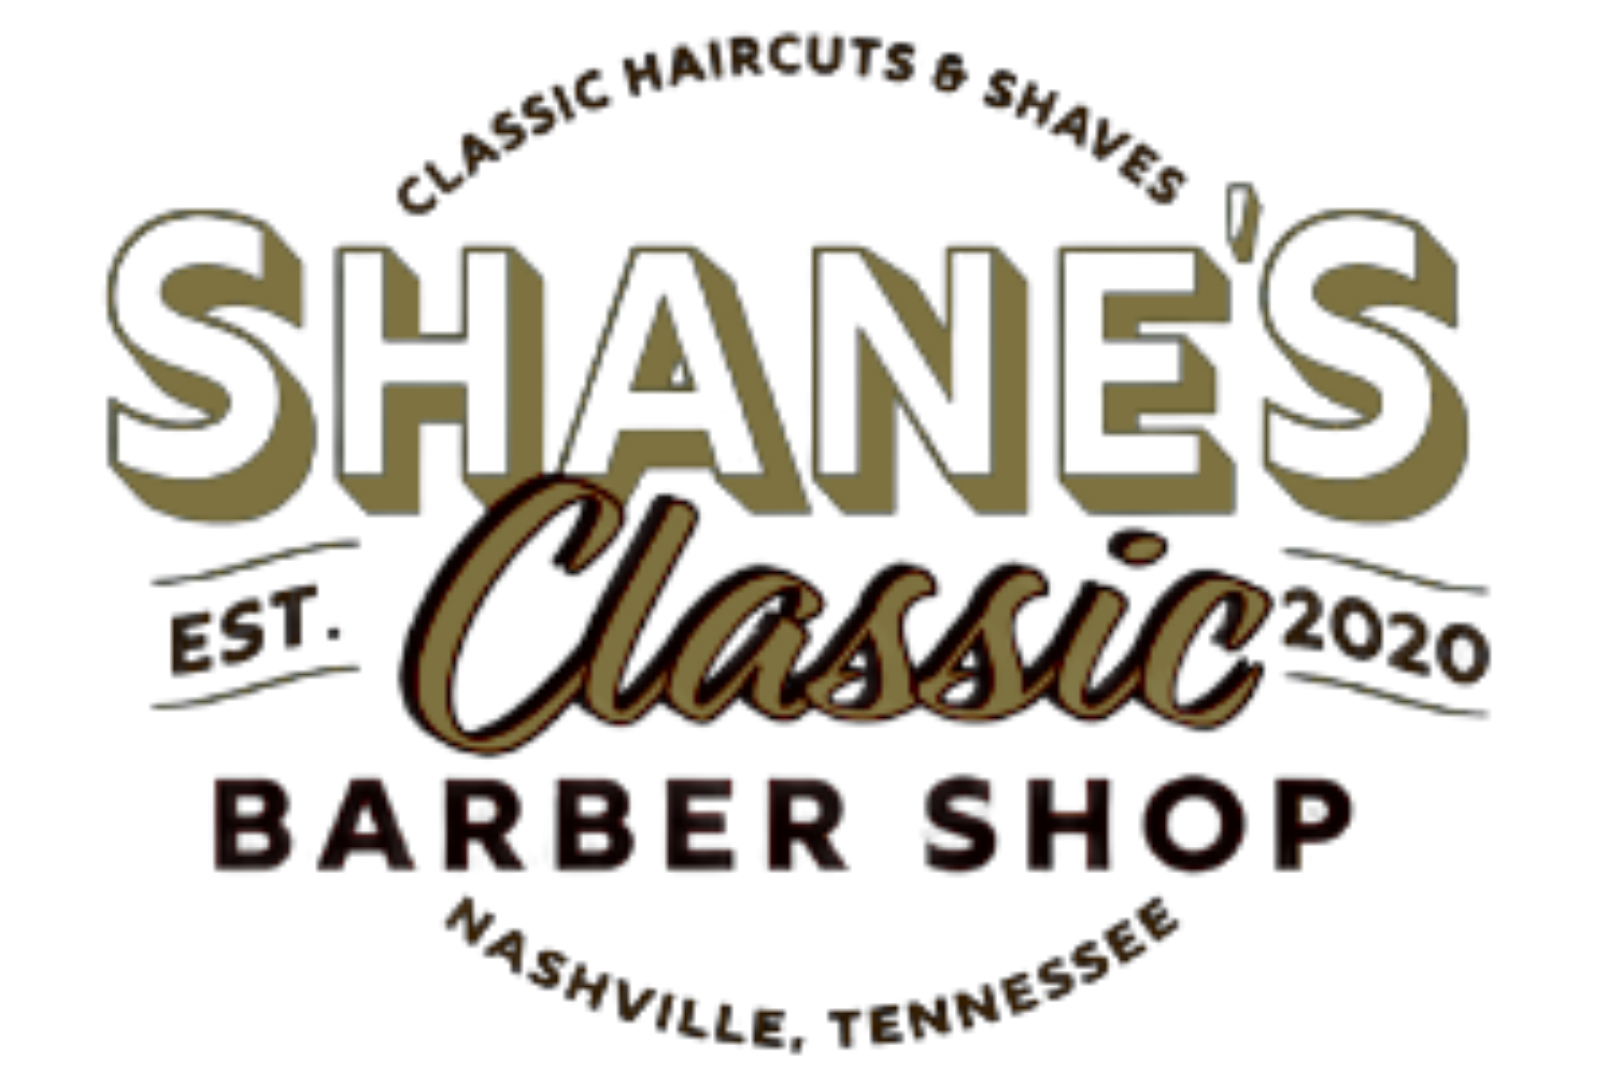 Shane's Classic Barber Shop